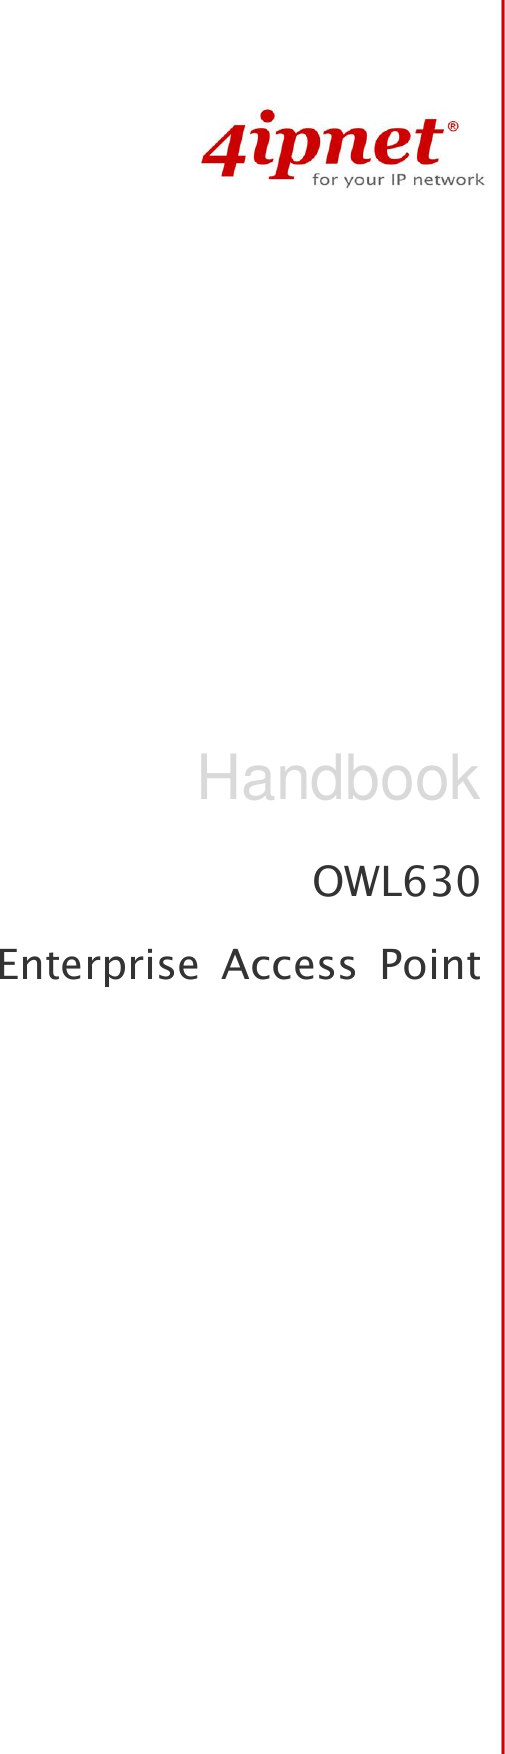    OWL630 Enterprise  Access  Point Handbook 